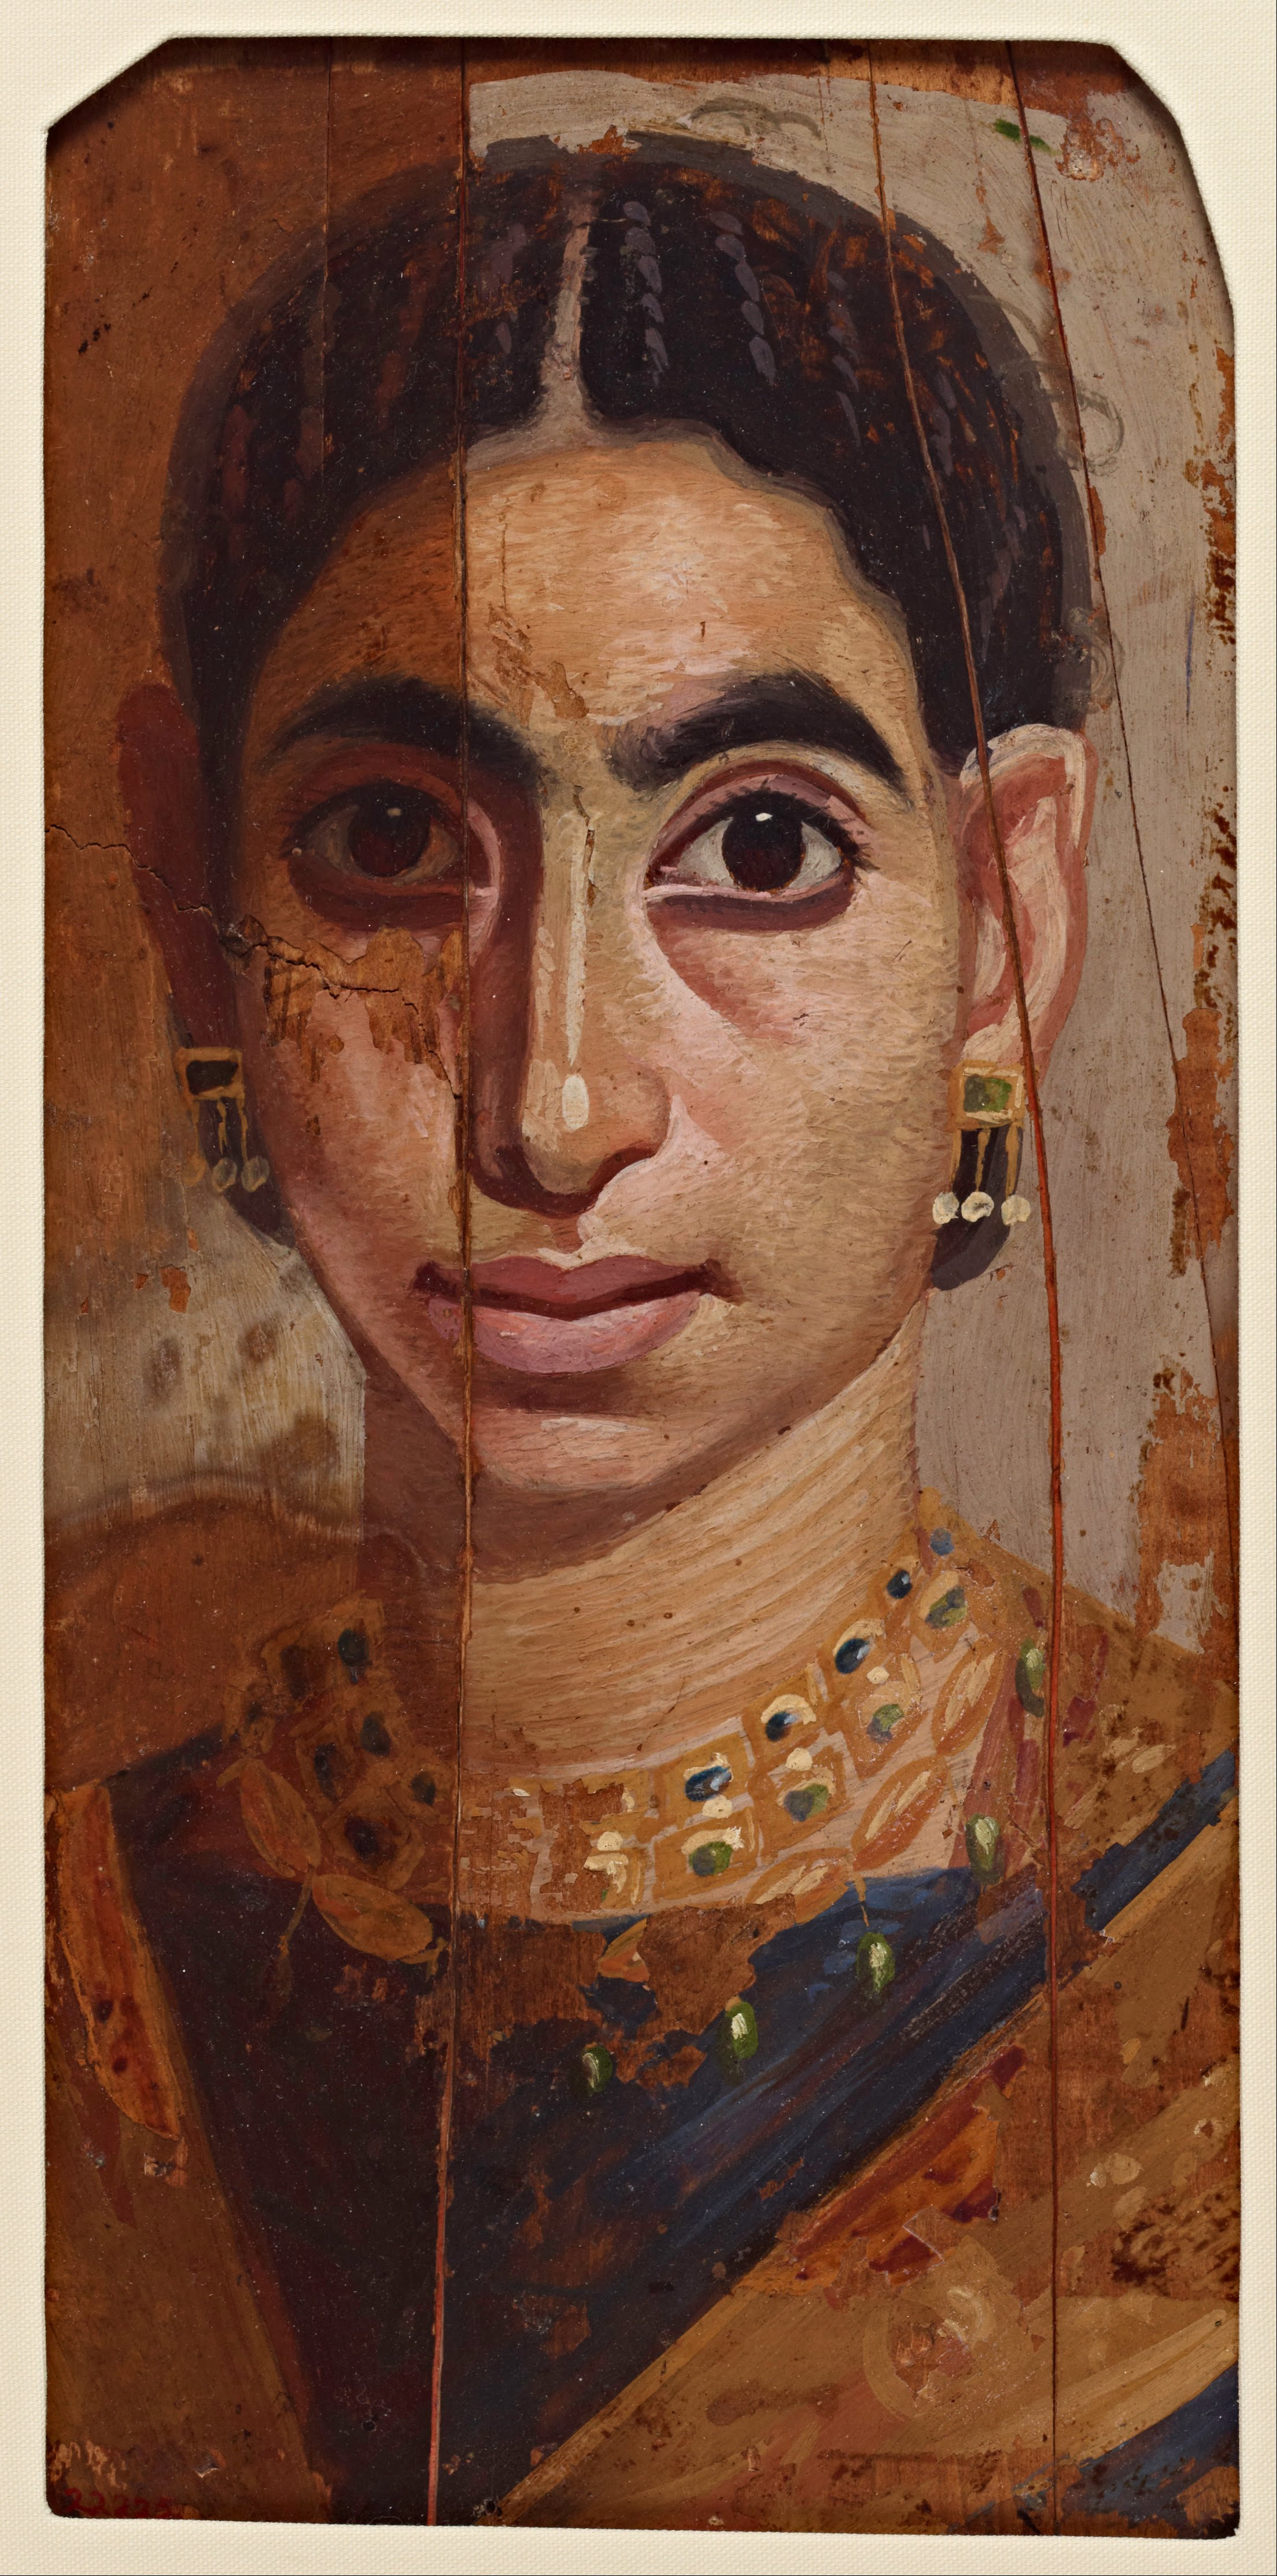 Unknown, Egypt - Portrait of a woman - Google Art Project